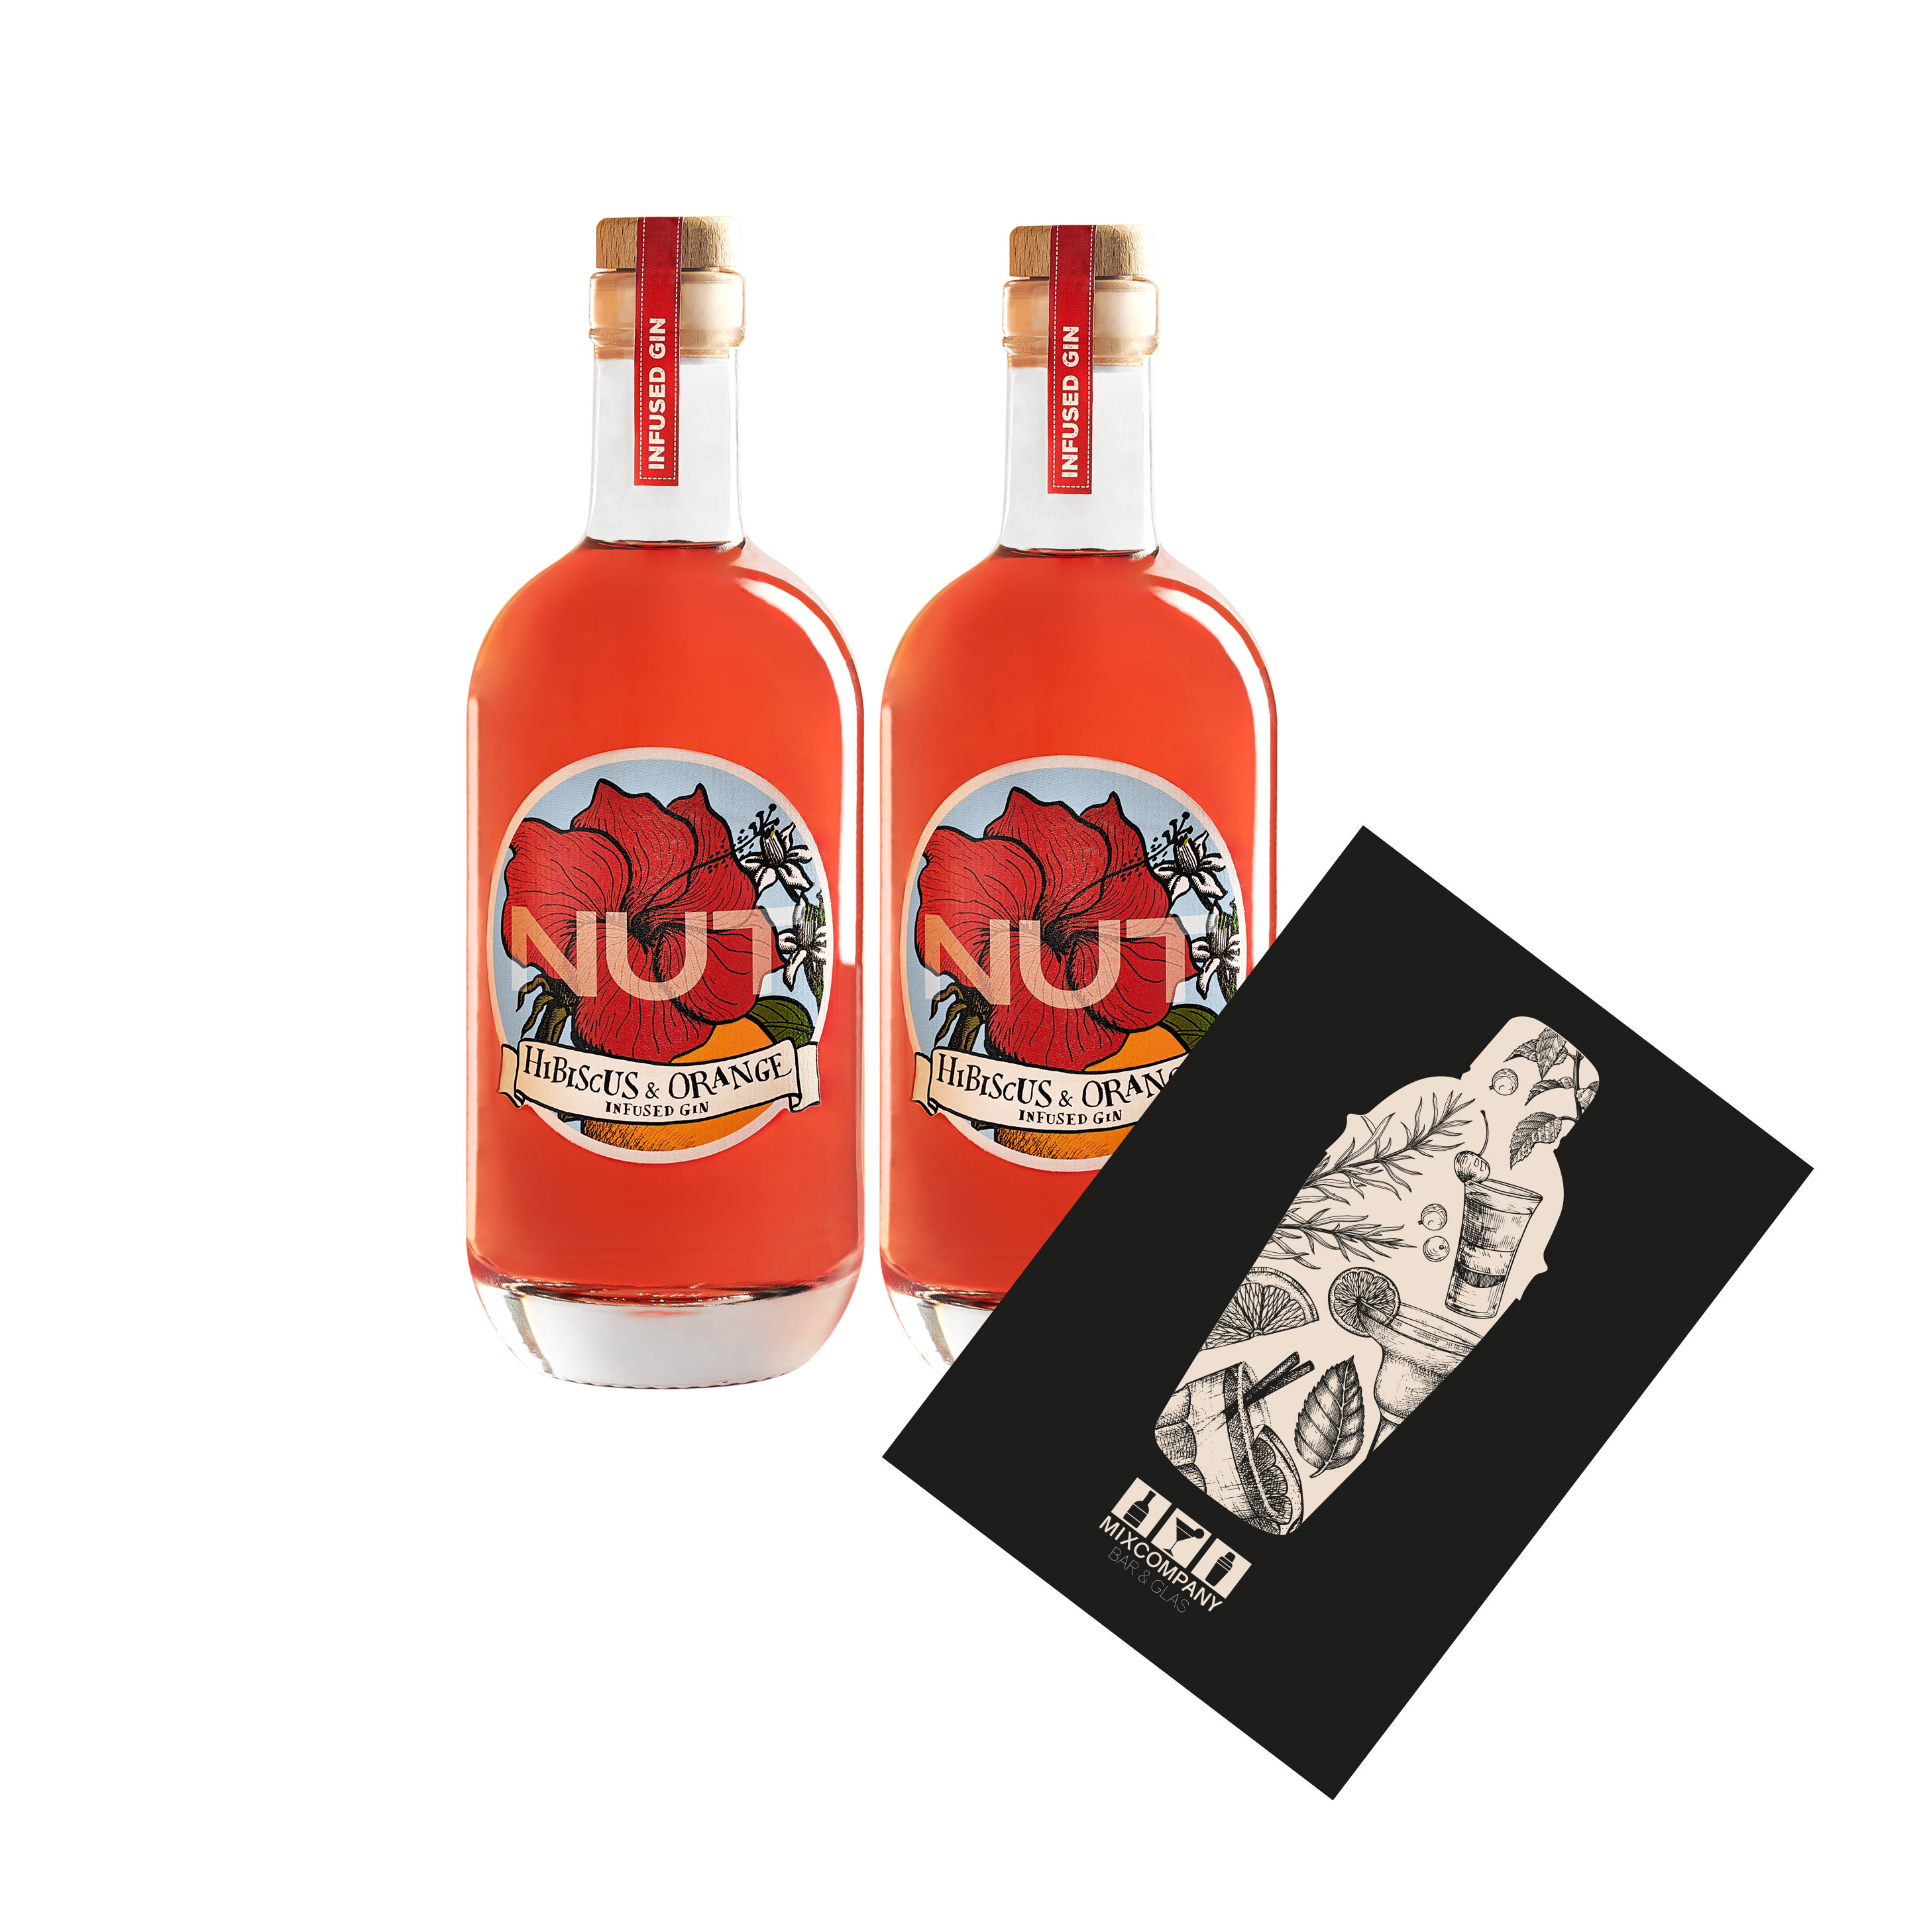 NUT 2er Set Infused Gin Hibiscus Orange 2x 0,7L (40% Vol) Hibiskus Orange Gin NUT Distillery- [Enthält Sulfite]